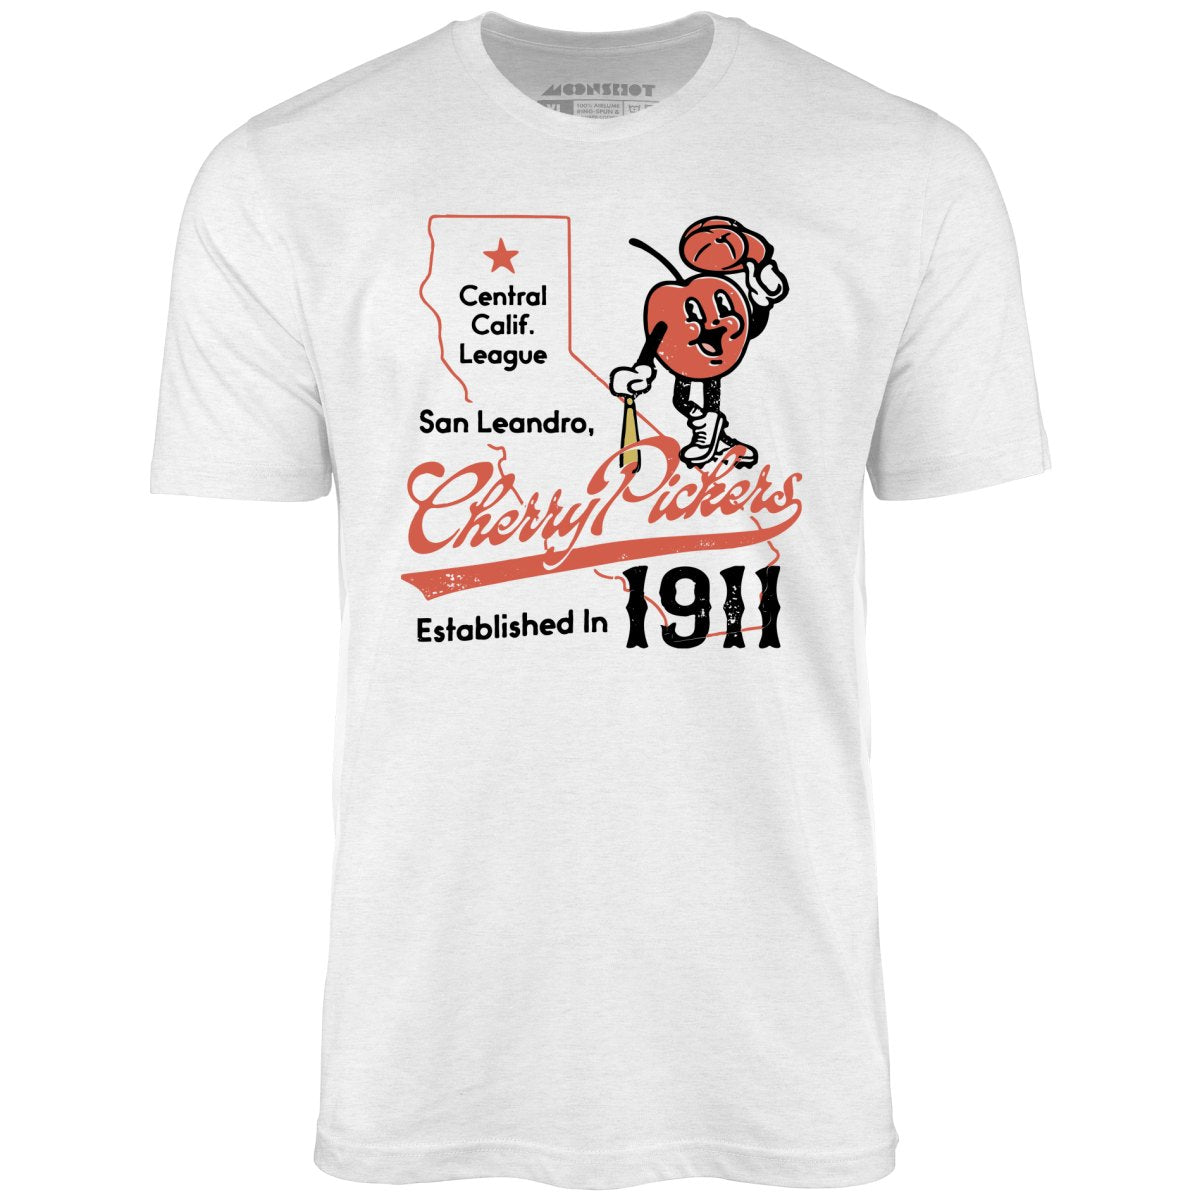 San Leandro Cherry Pickers - California - Vintage Defunct Baseball Teams - Unisex T-Shirt